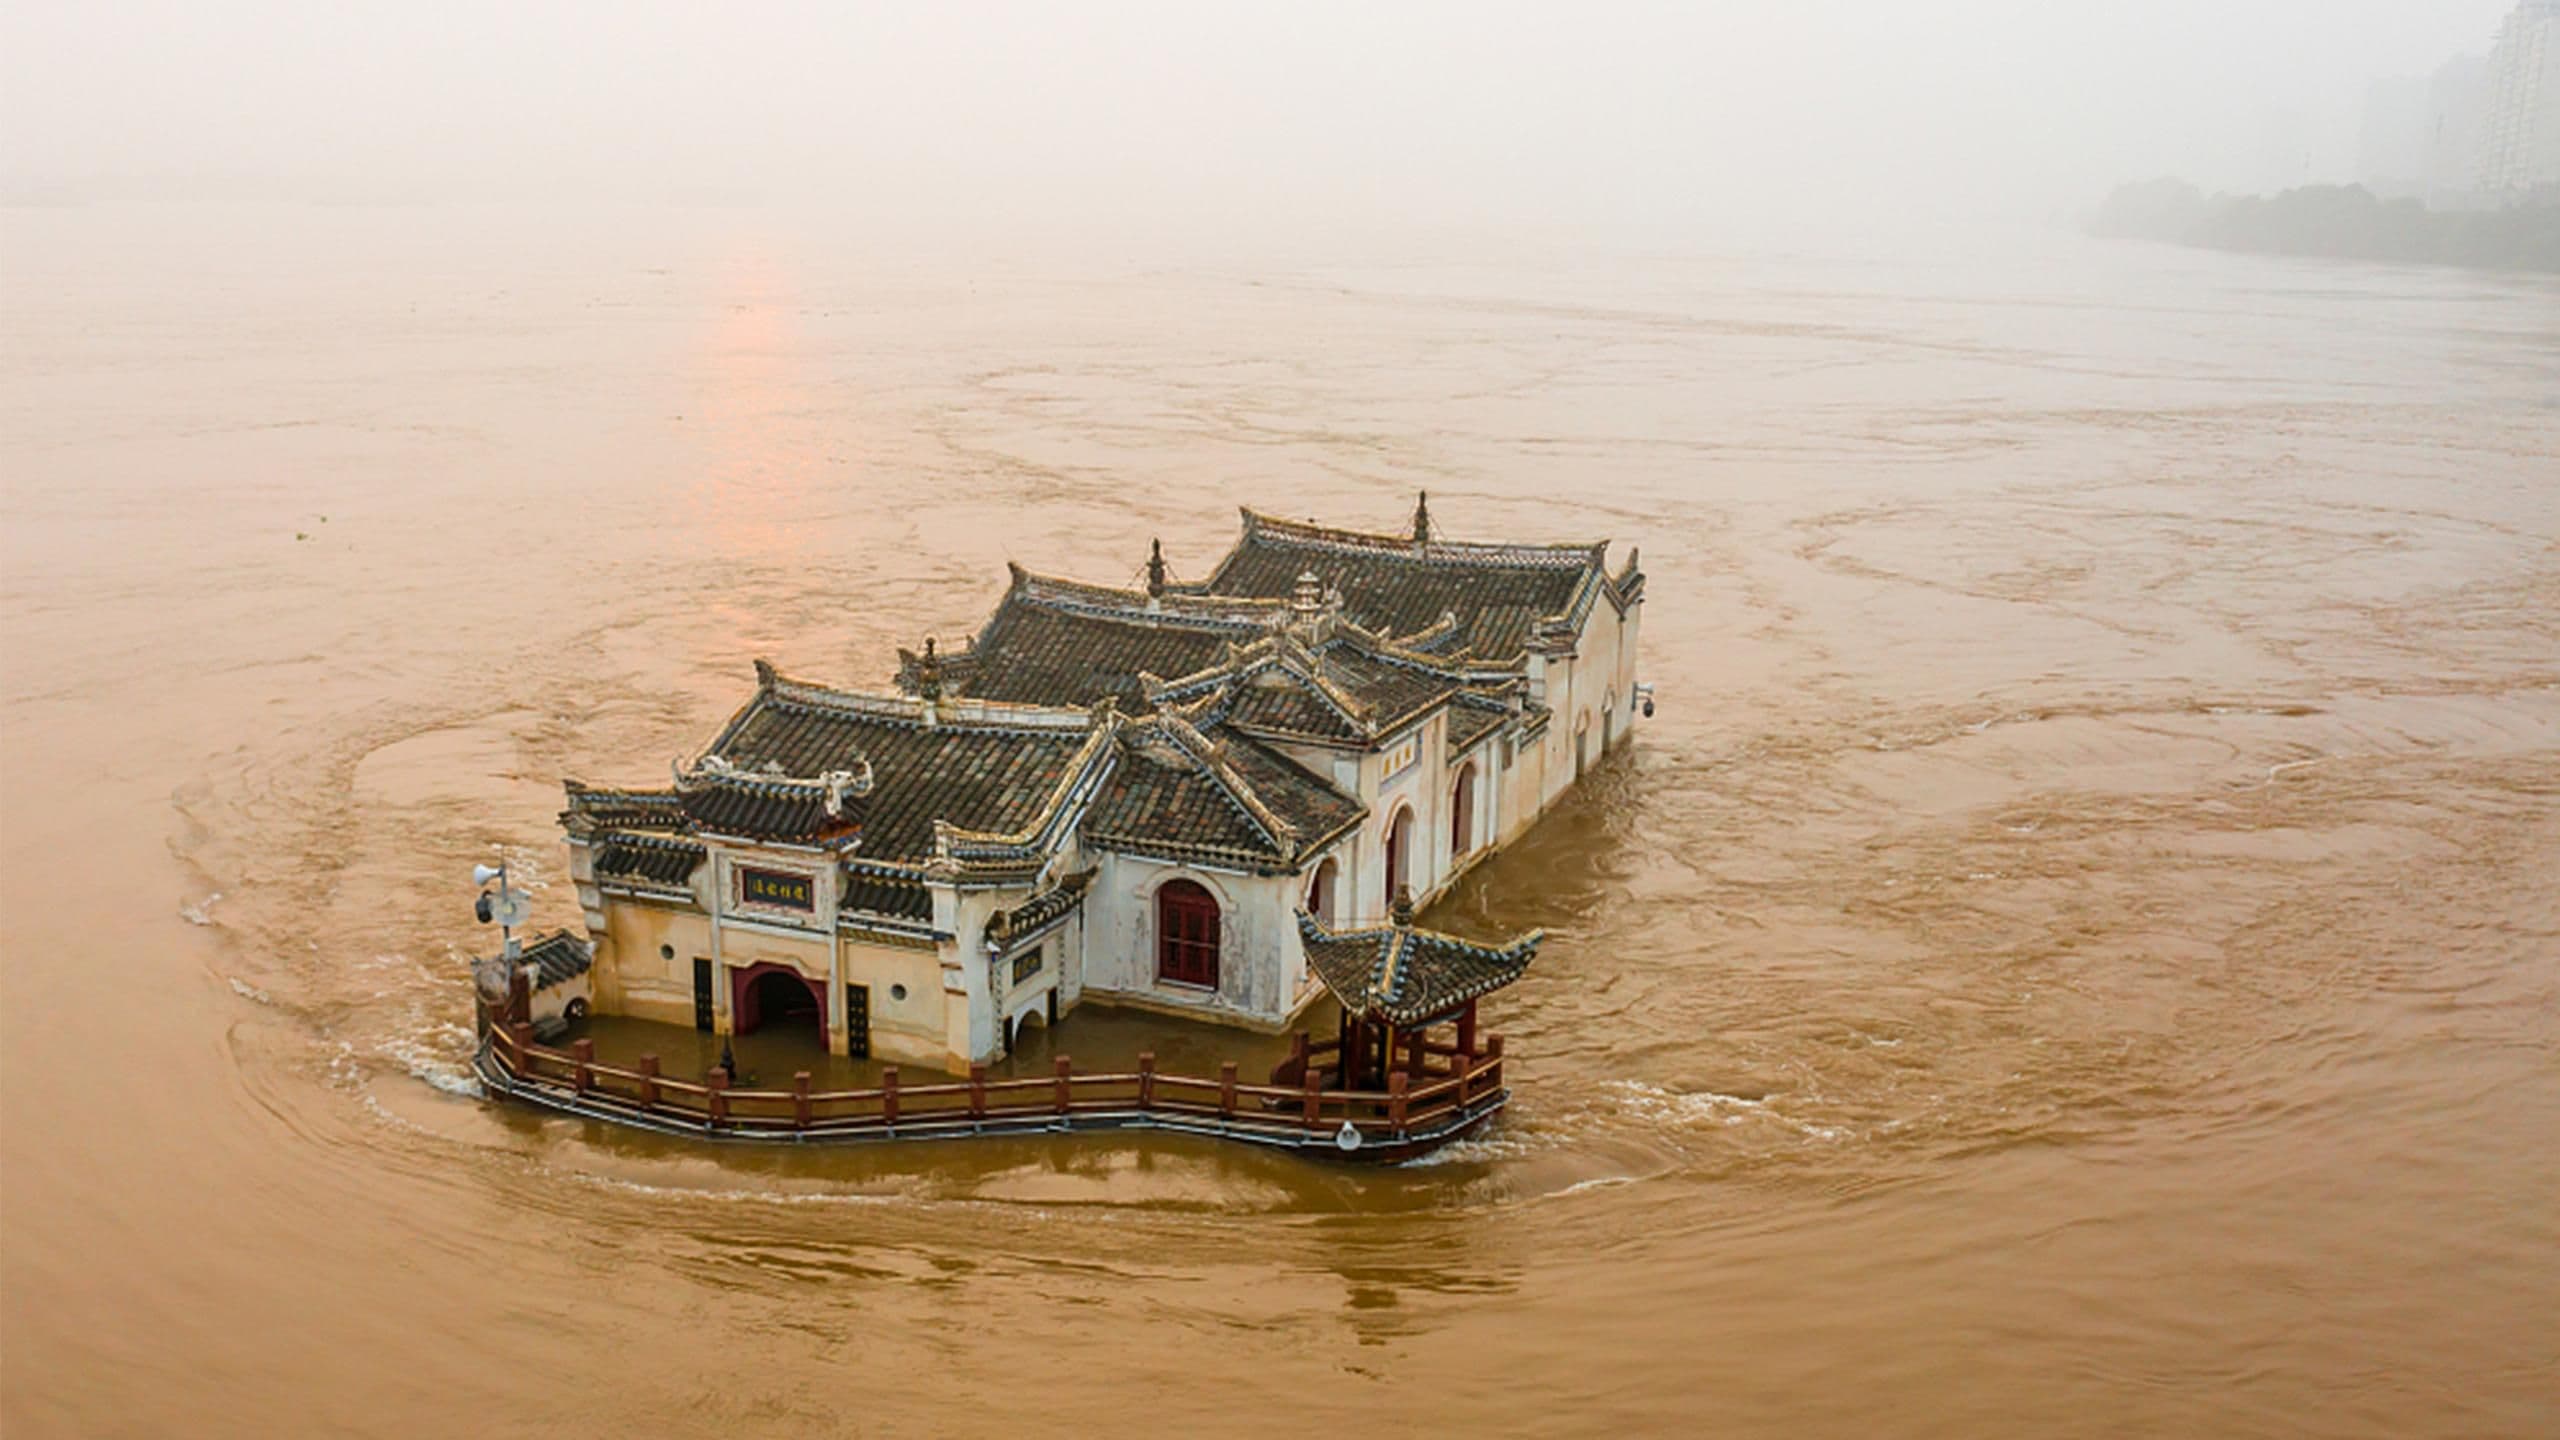 700-year-old pavilion in Yangtze floodwater, 2020